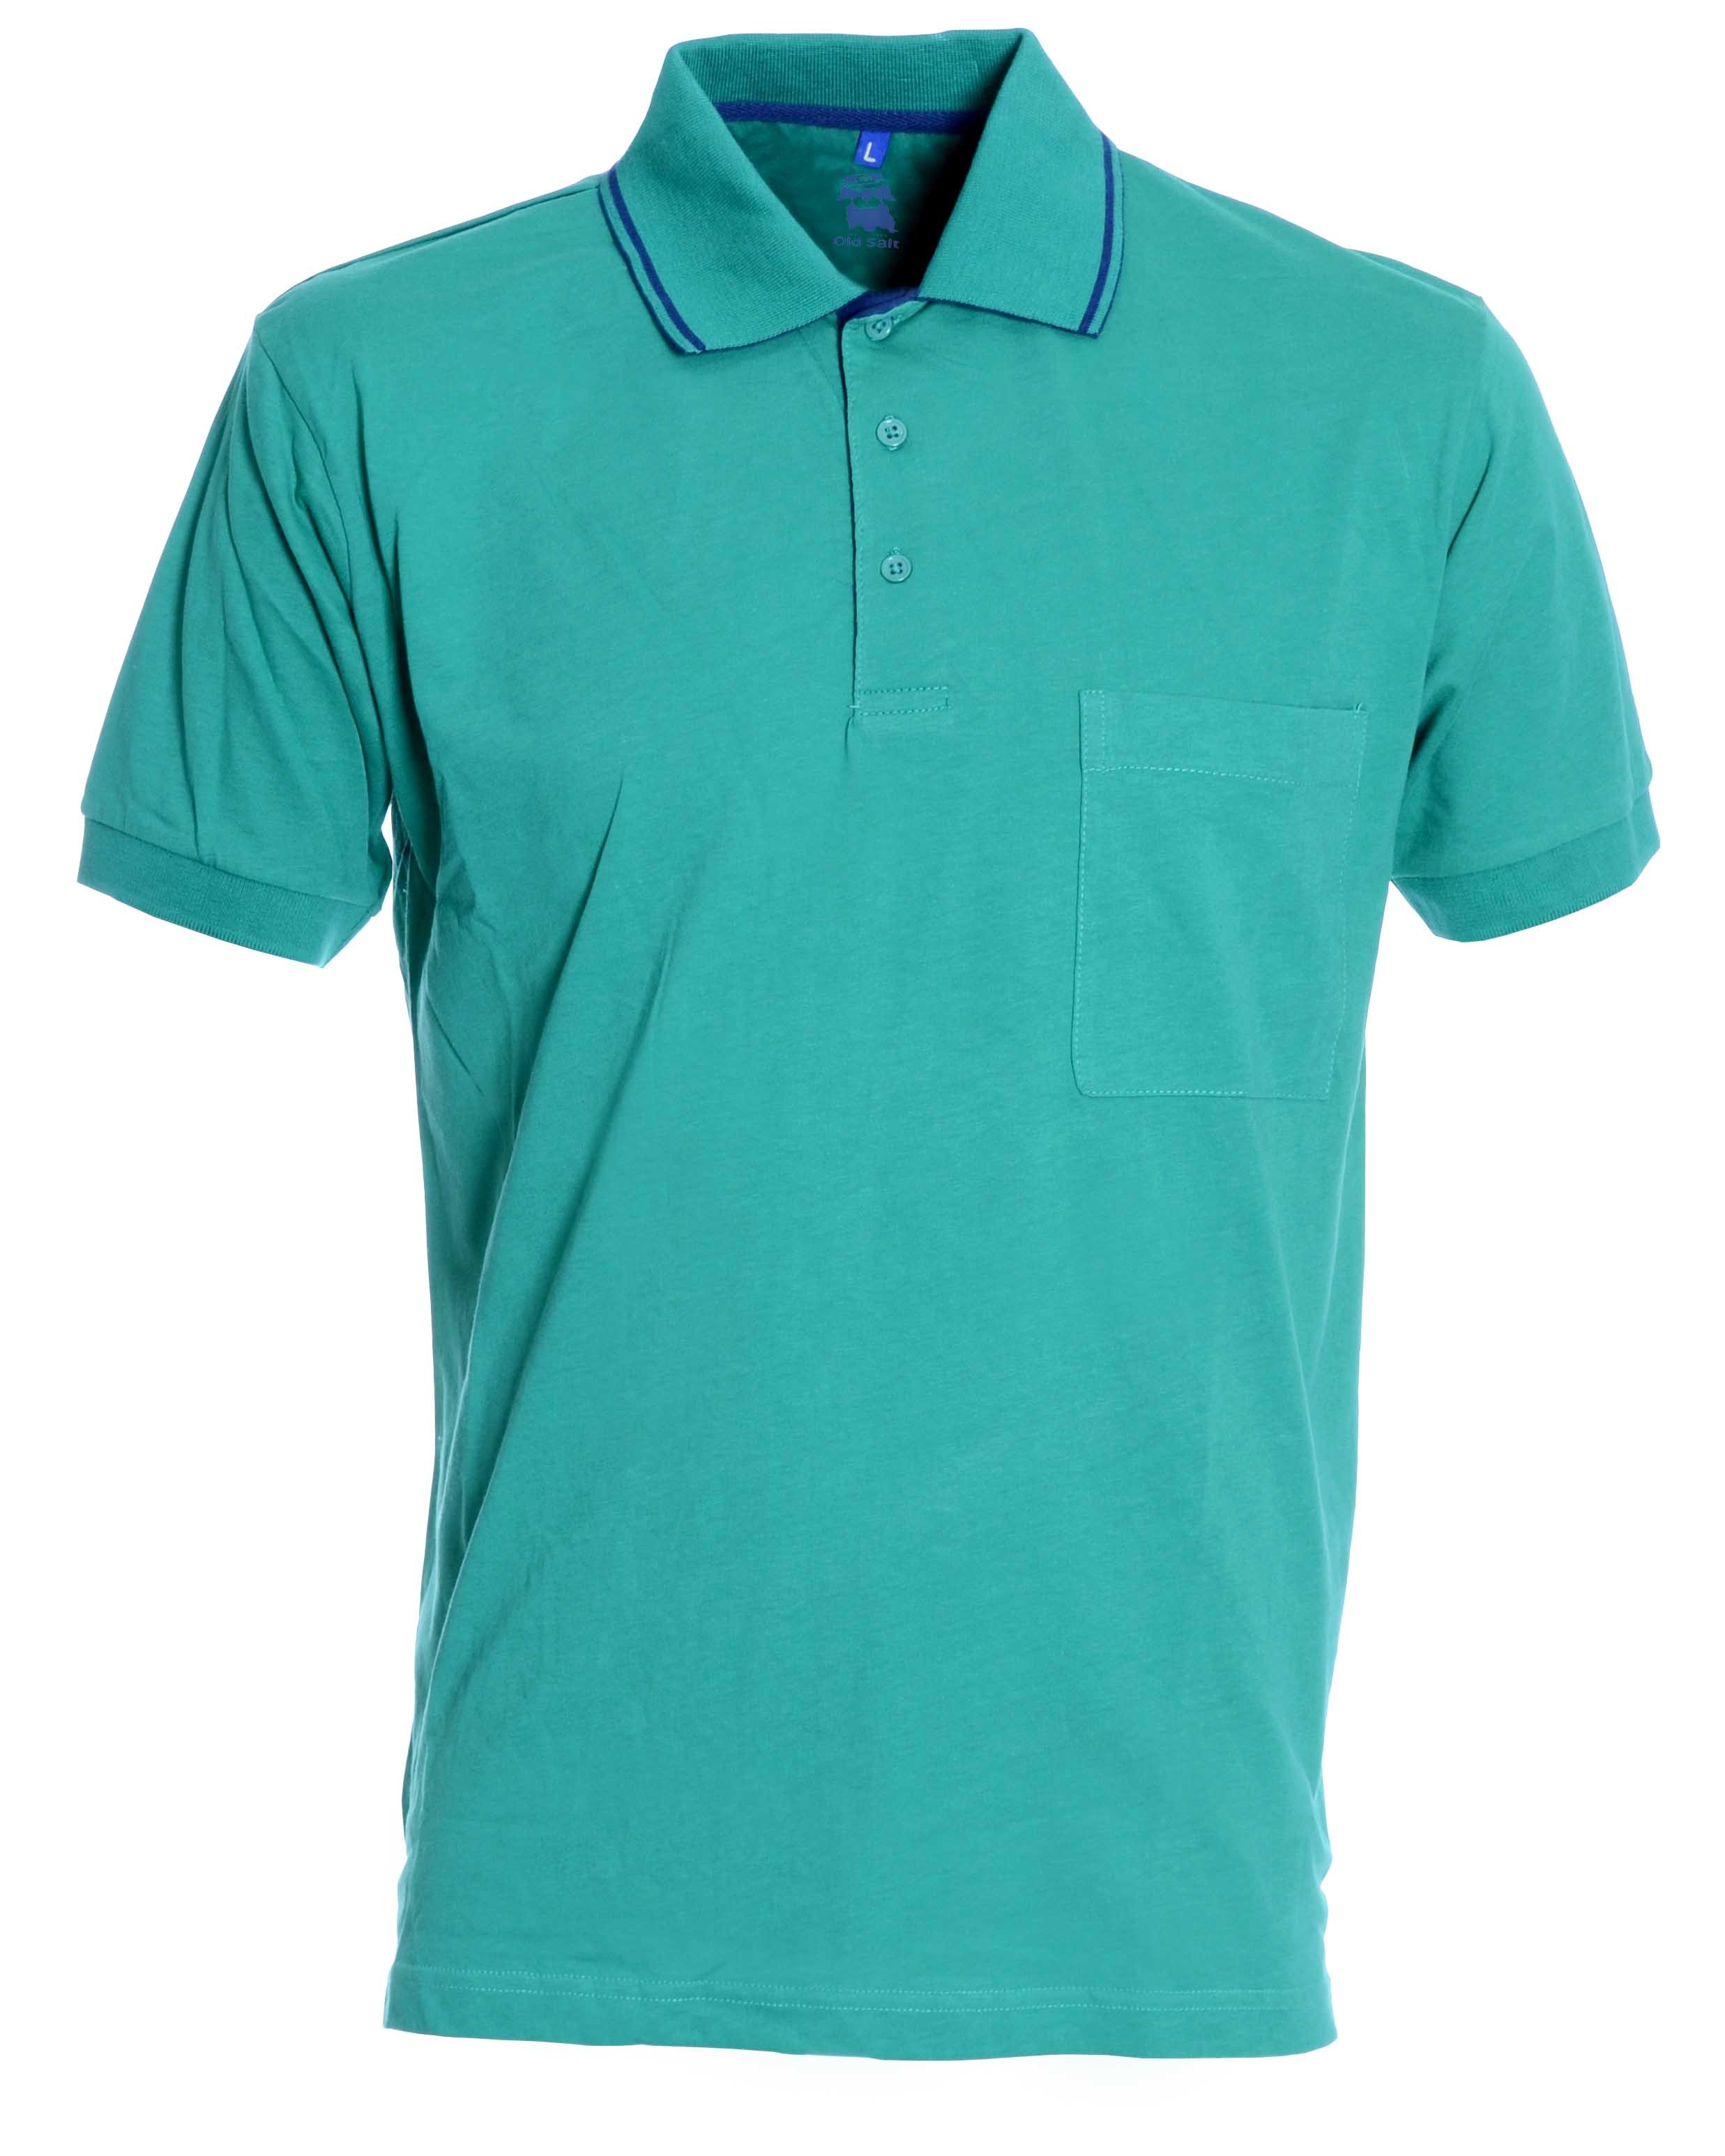 Double TWO | Plain Green Polo Shirt - ClipArt Best - ClipArt Best